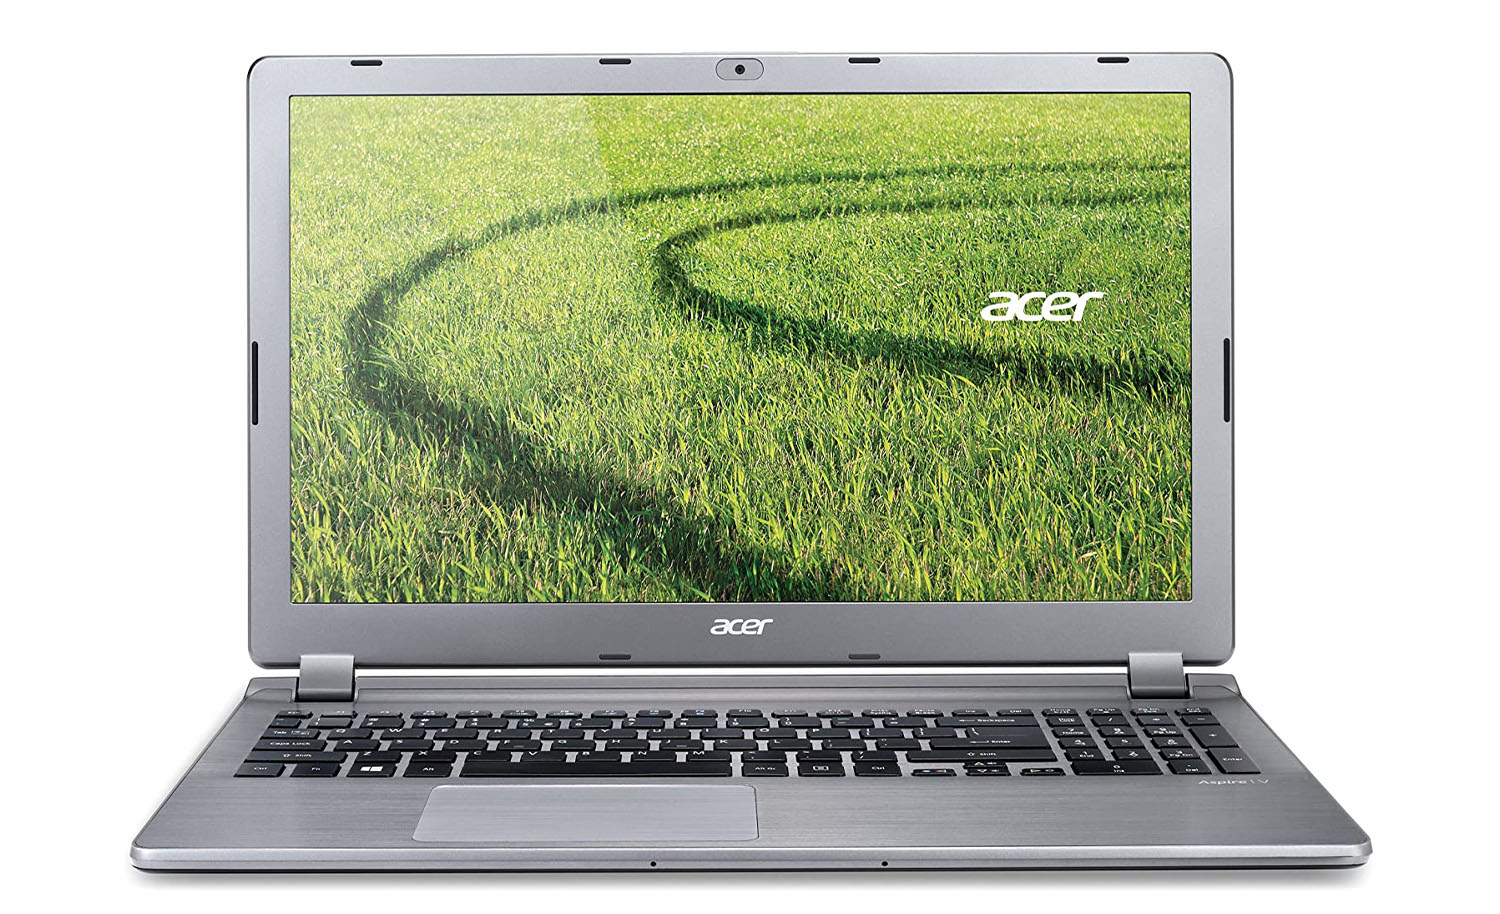 Acer Aspire V5 Intel Core i3 2nd Gen 4GB RAM 500GB HDD Windows 10 Home